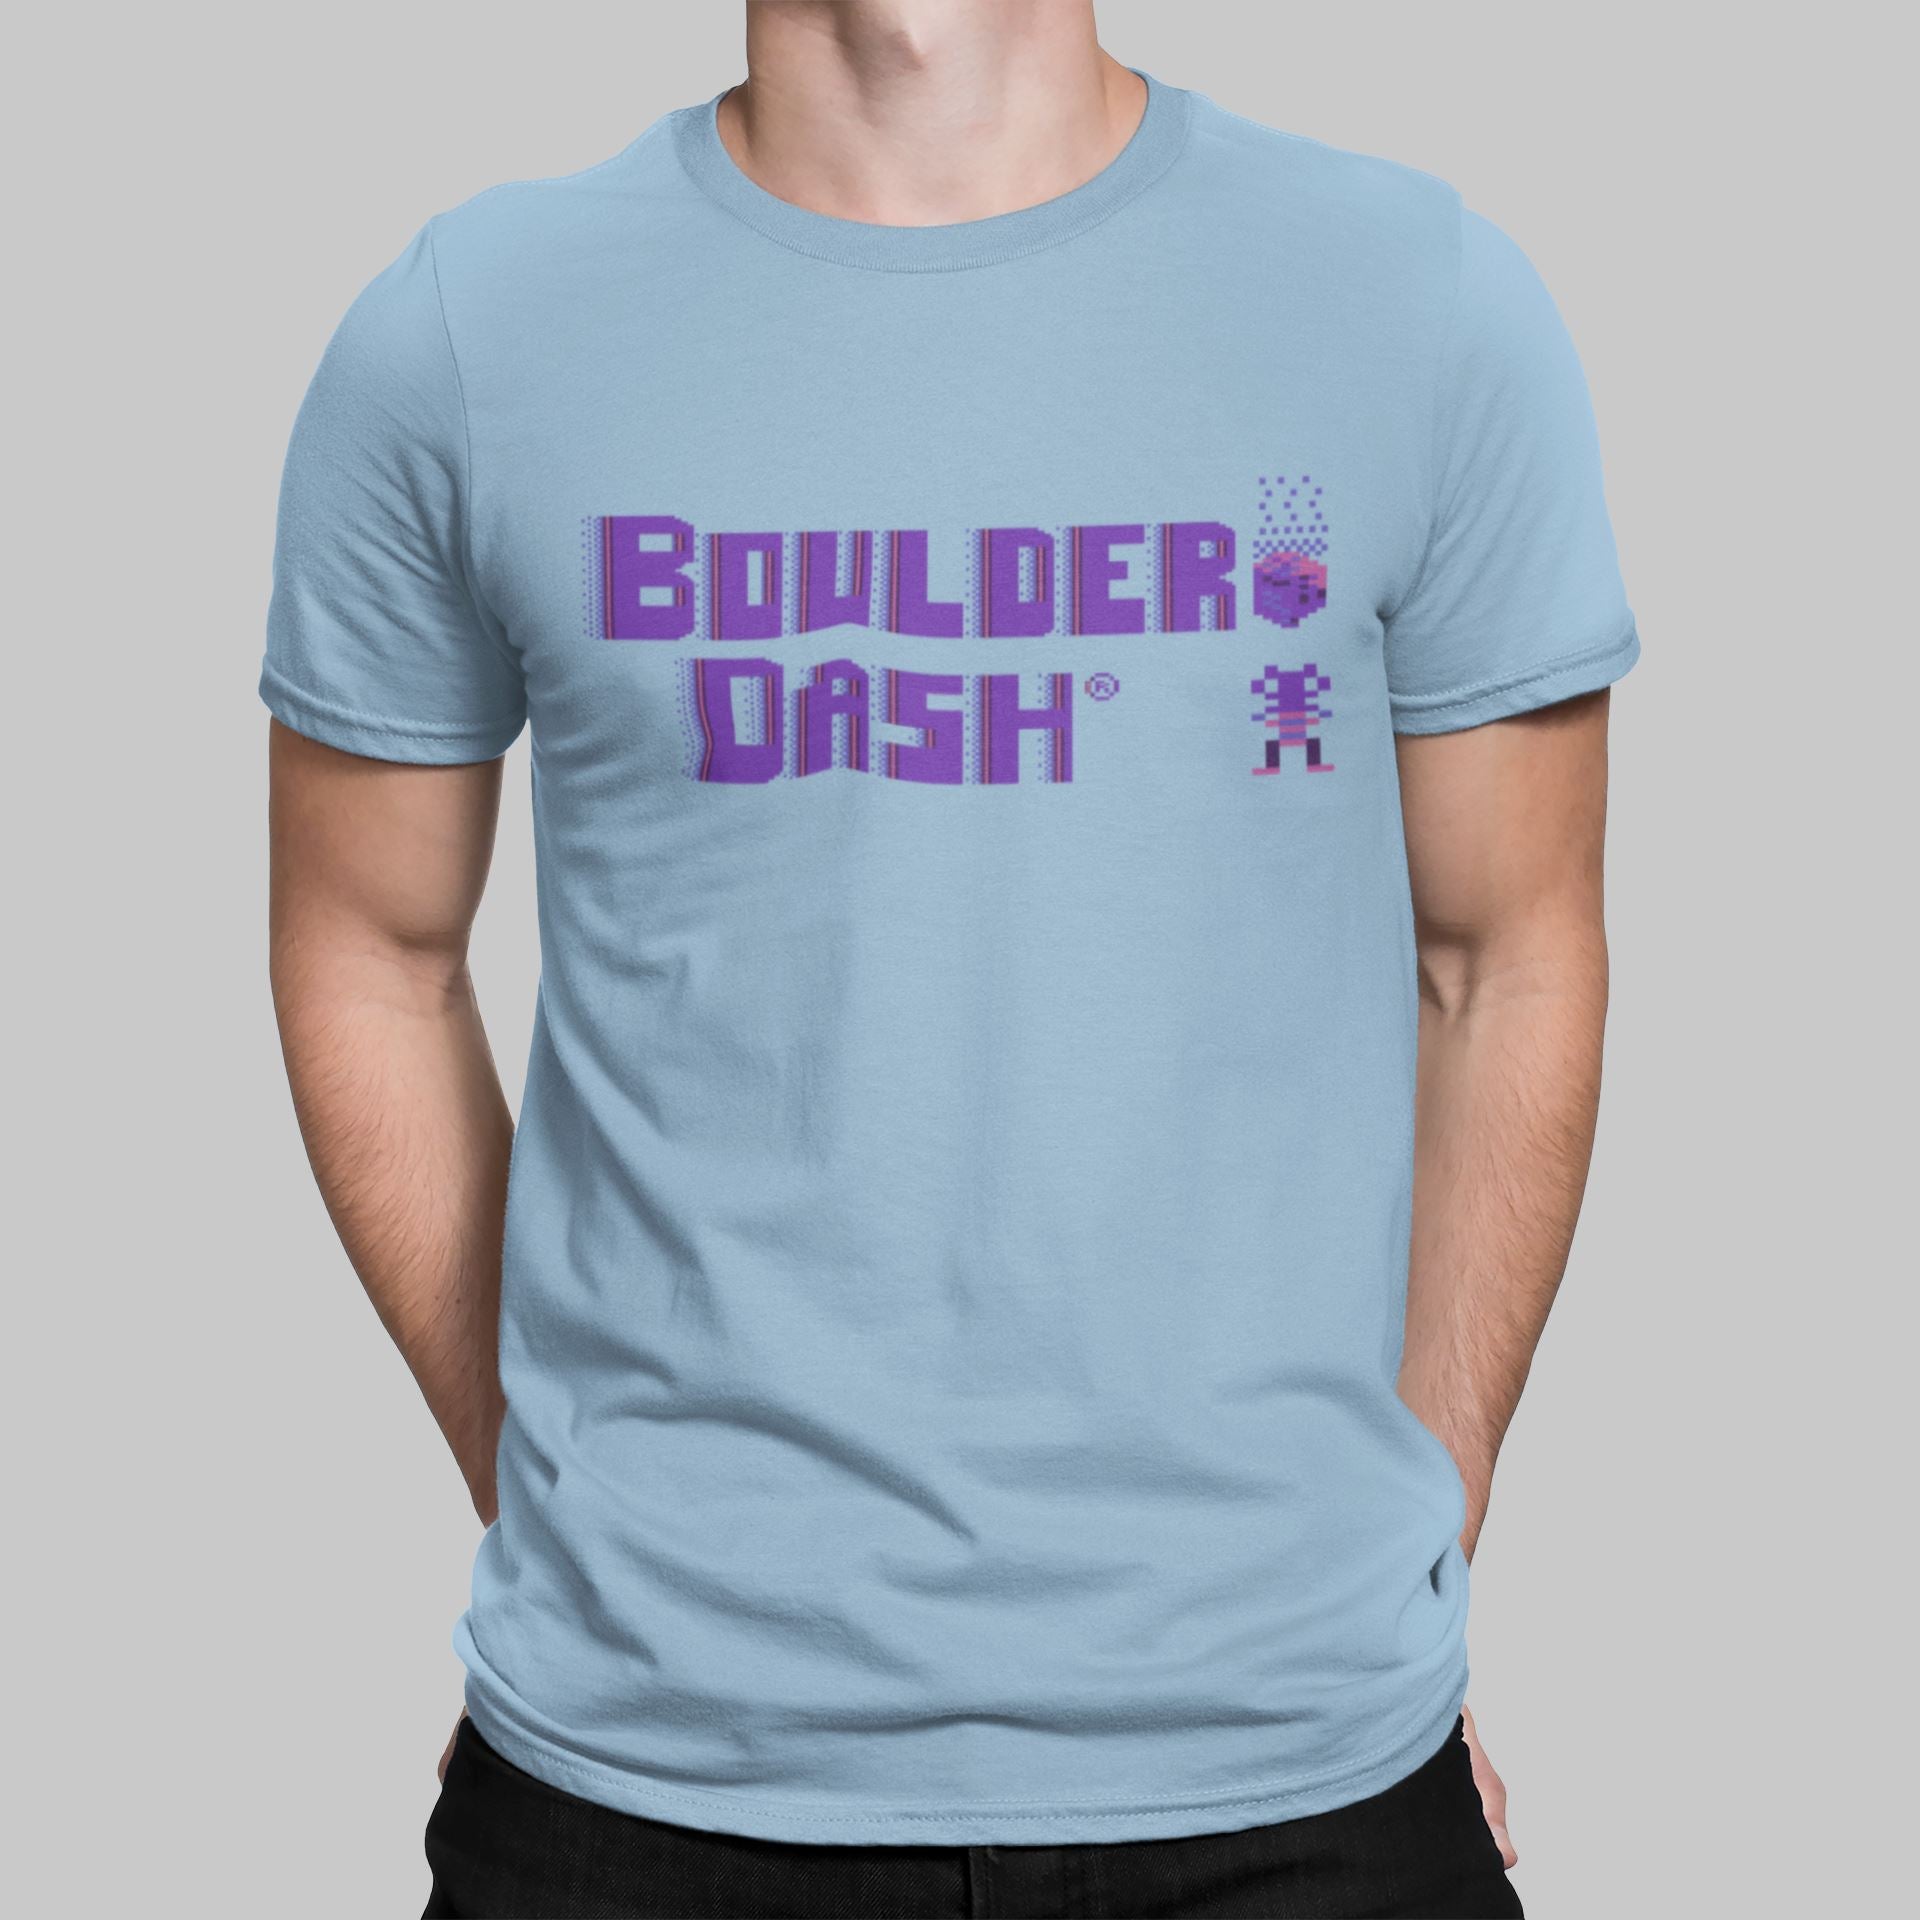 Boulder Dash Retro Gaming T-Shirt T-Shirt Seven Squared Small 34-36" Light Blue 